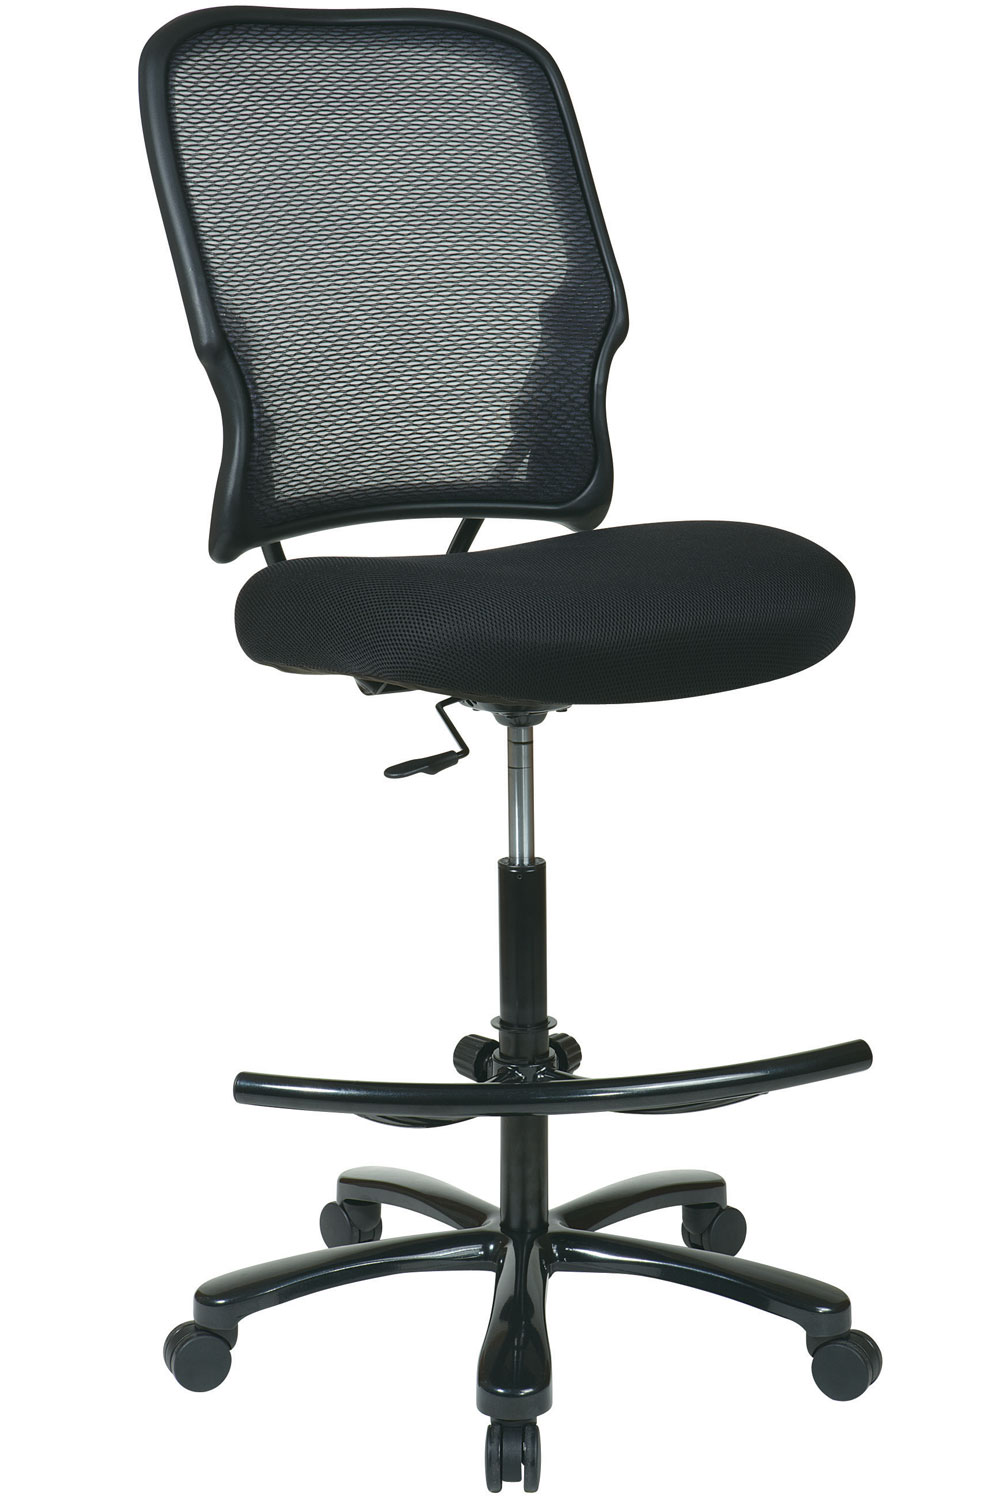 tall office chair